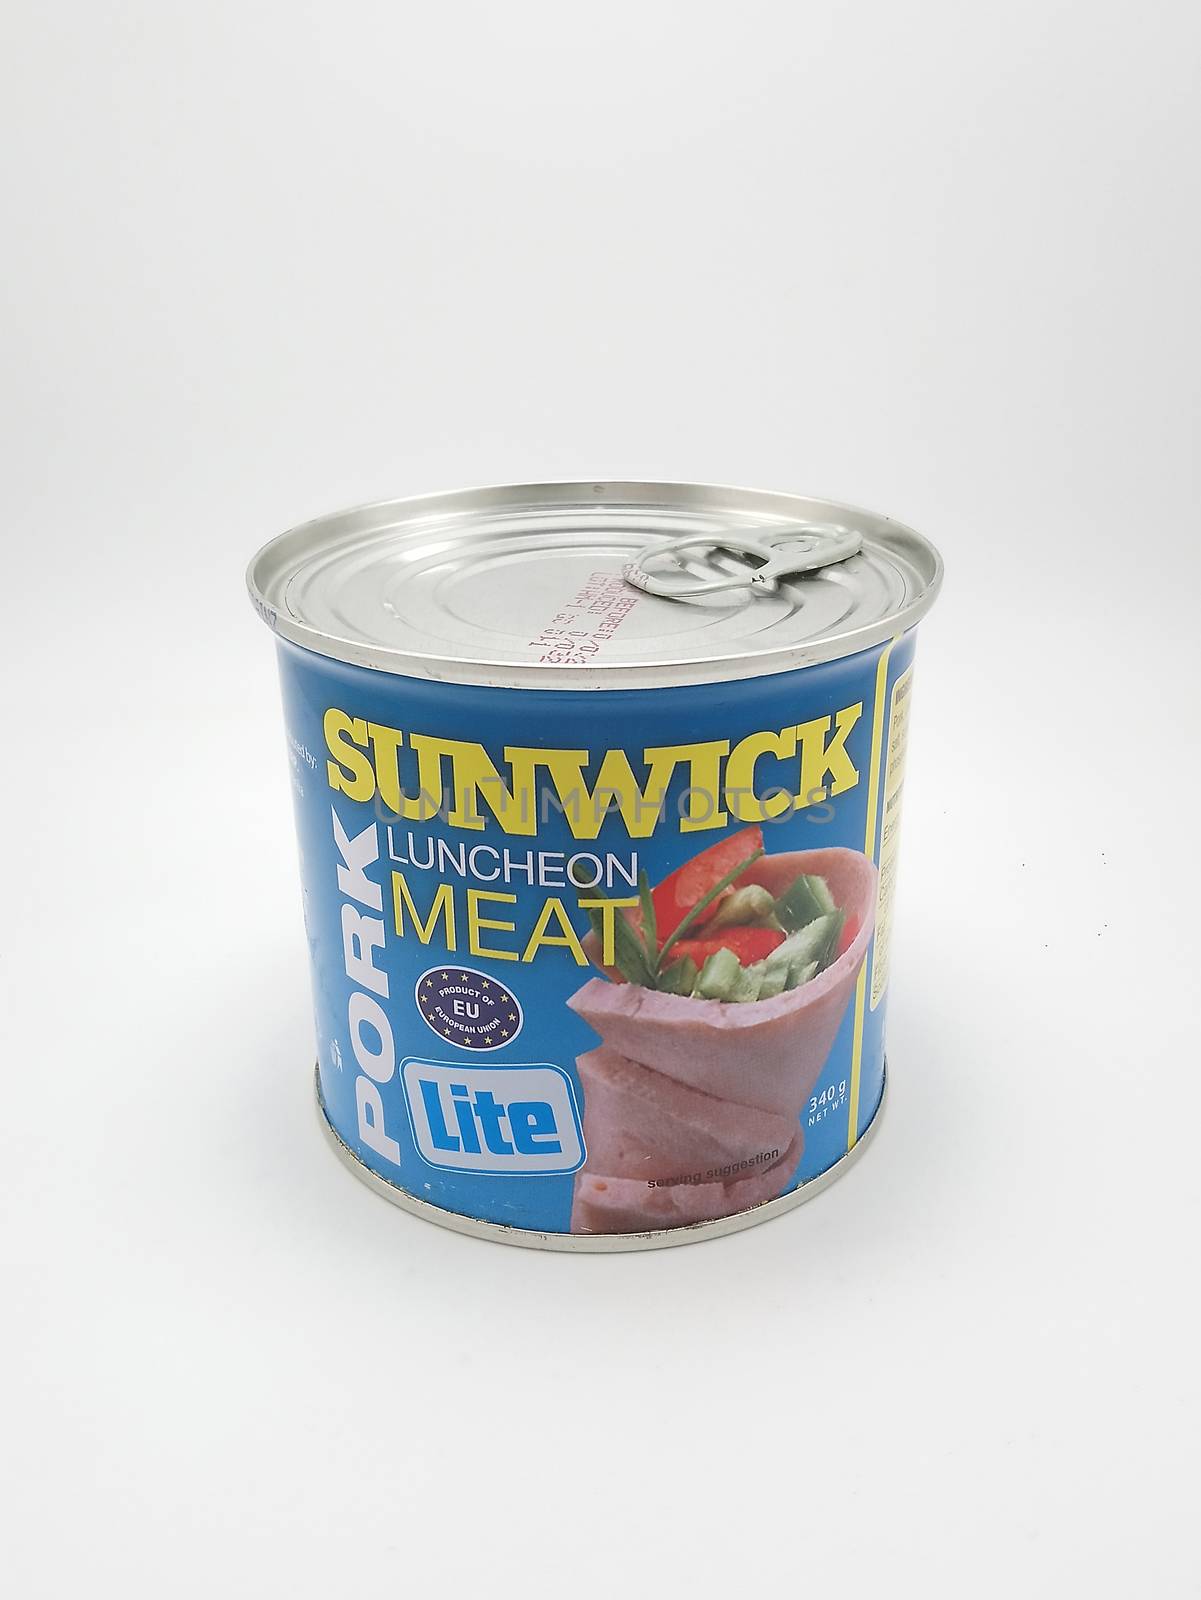 Sunwick pork luncheon meat lite in Manila, Philippines by imwaltersy